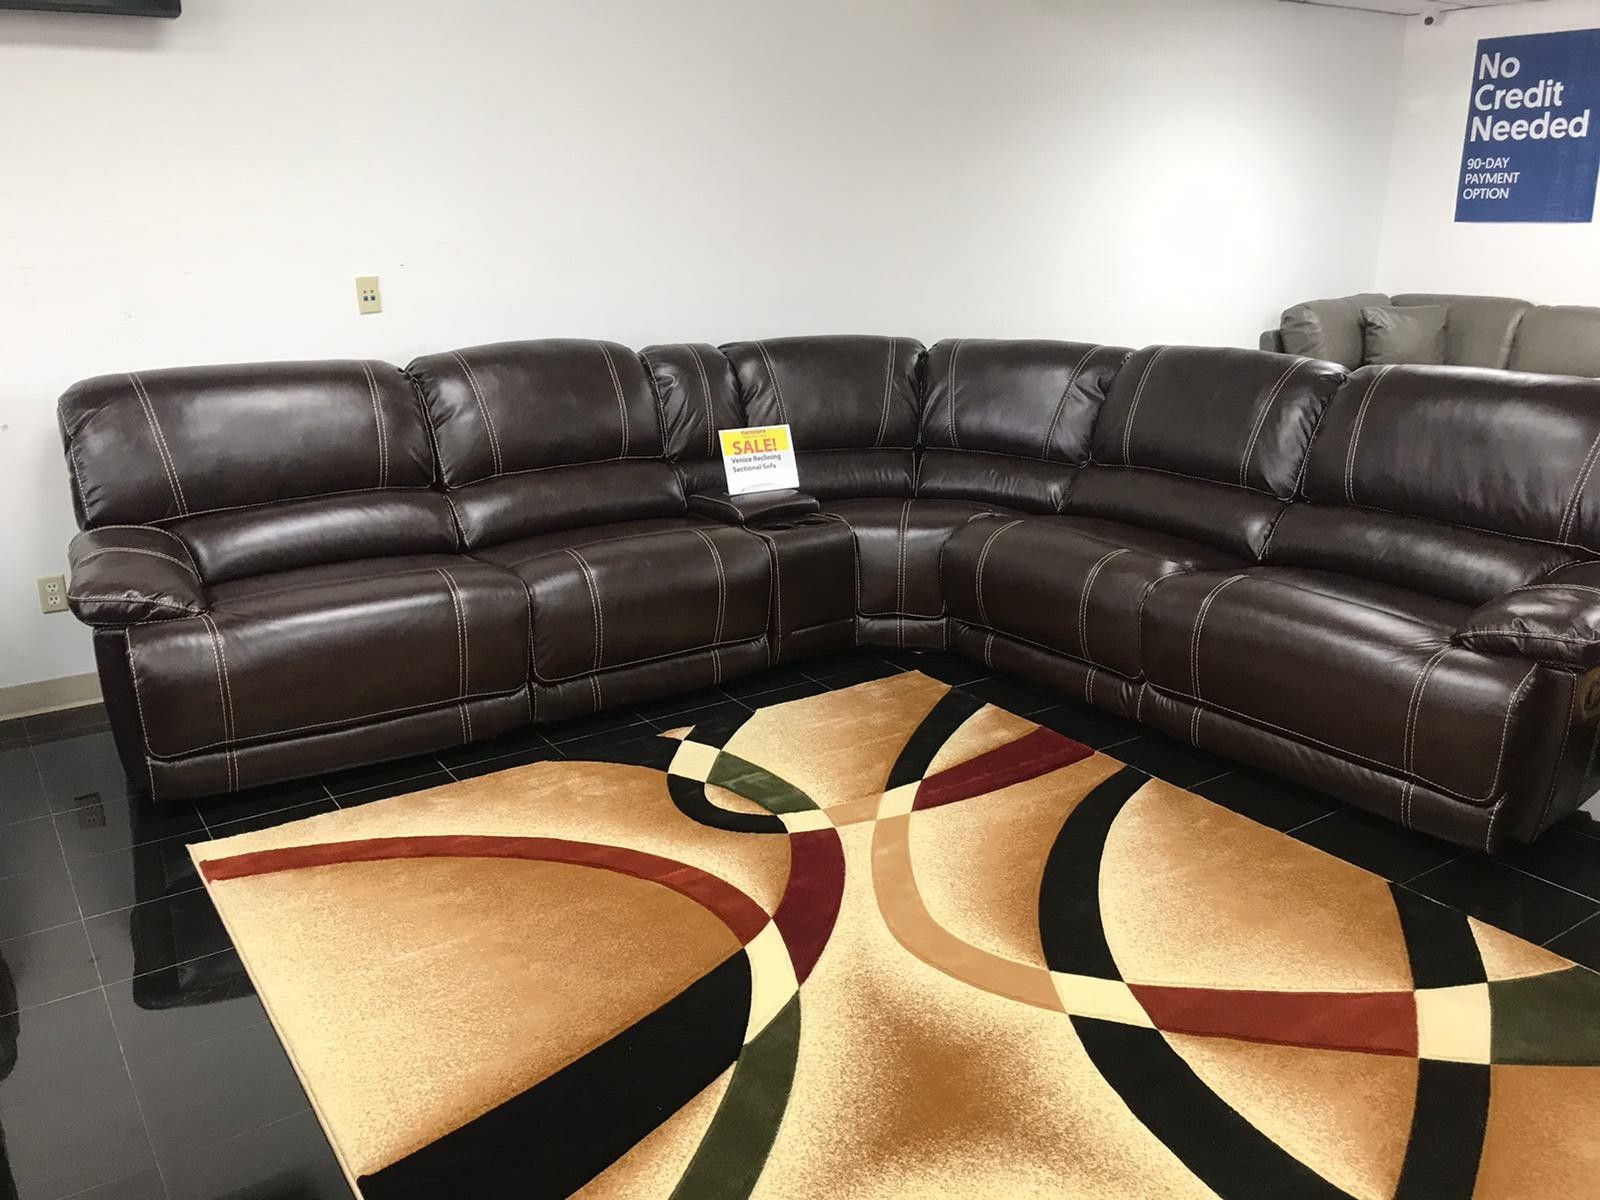 Venice Brown Reclining Sectional Sofa $999. NO CREDIT CHECK FINANCING